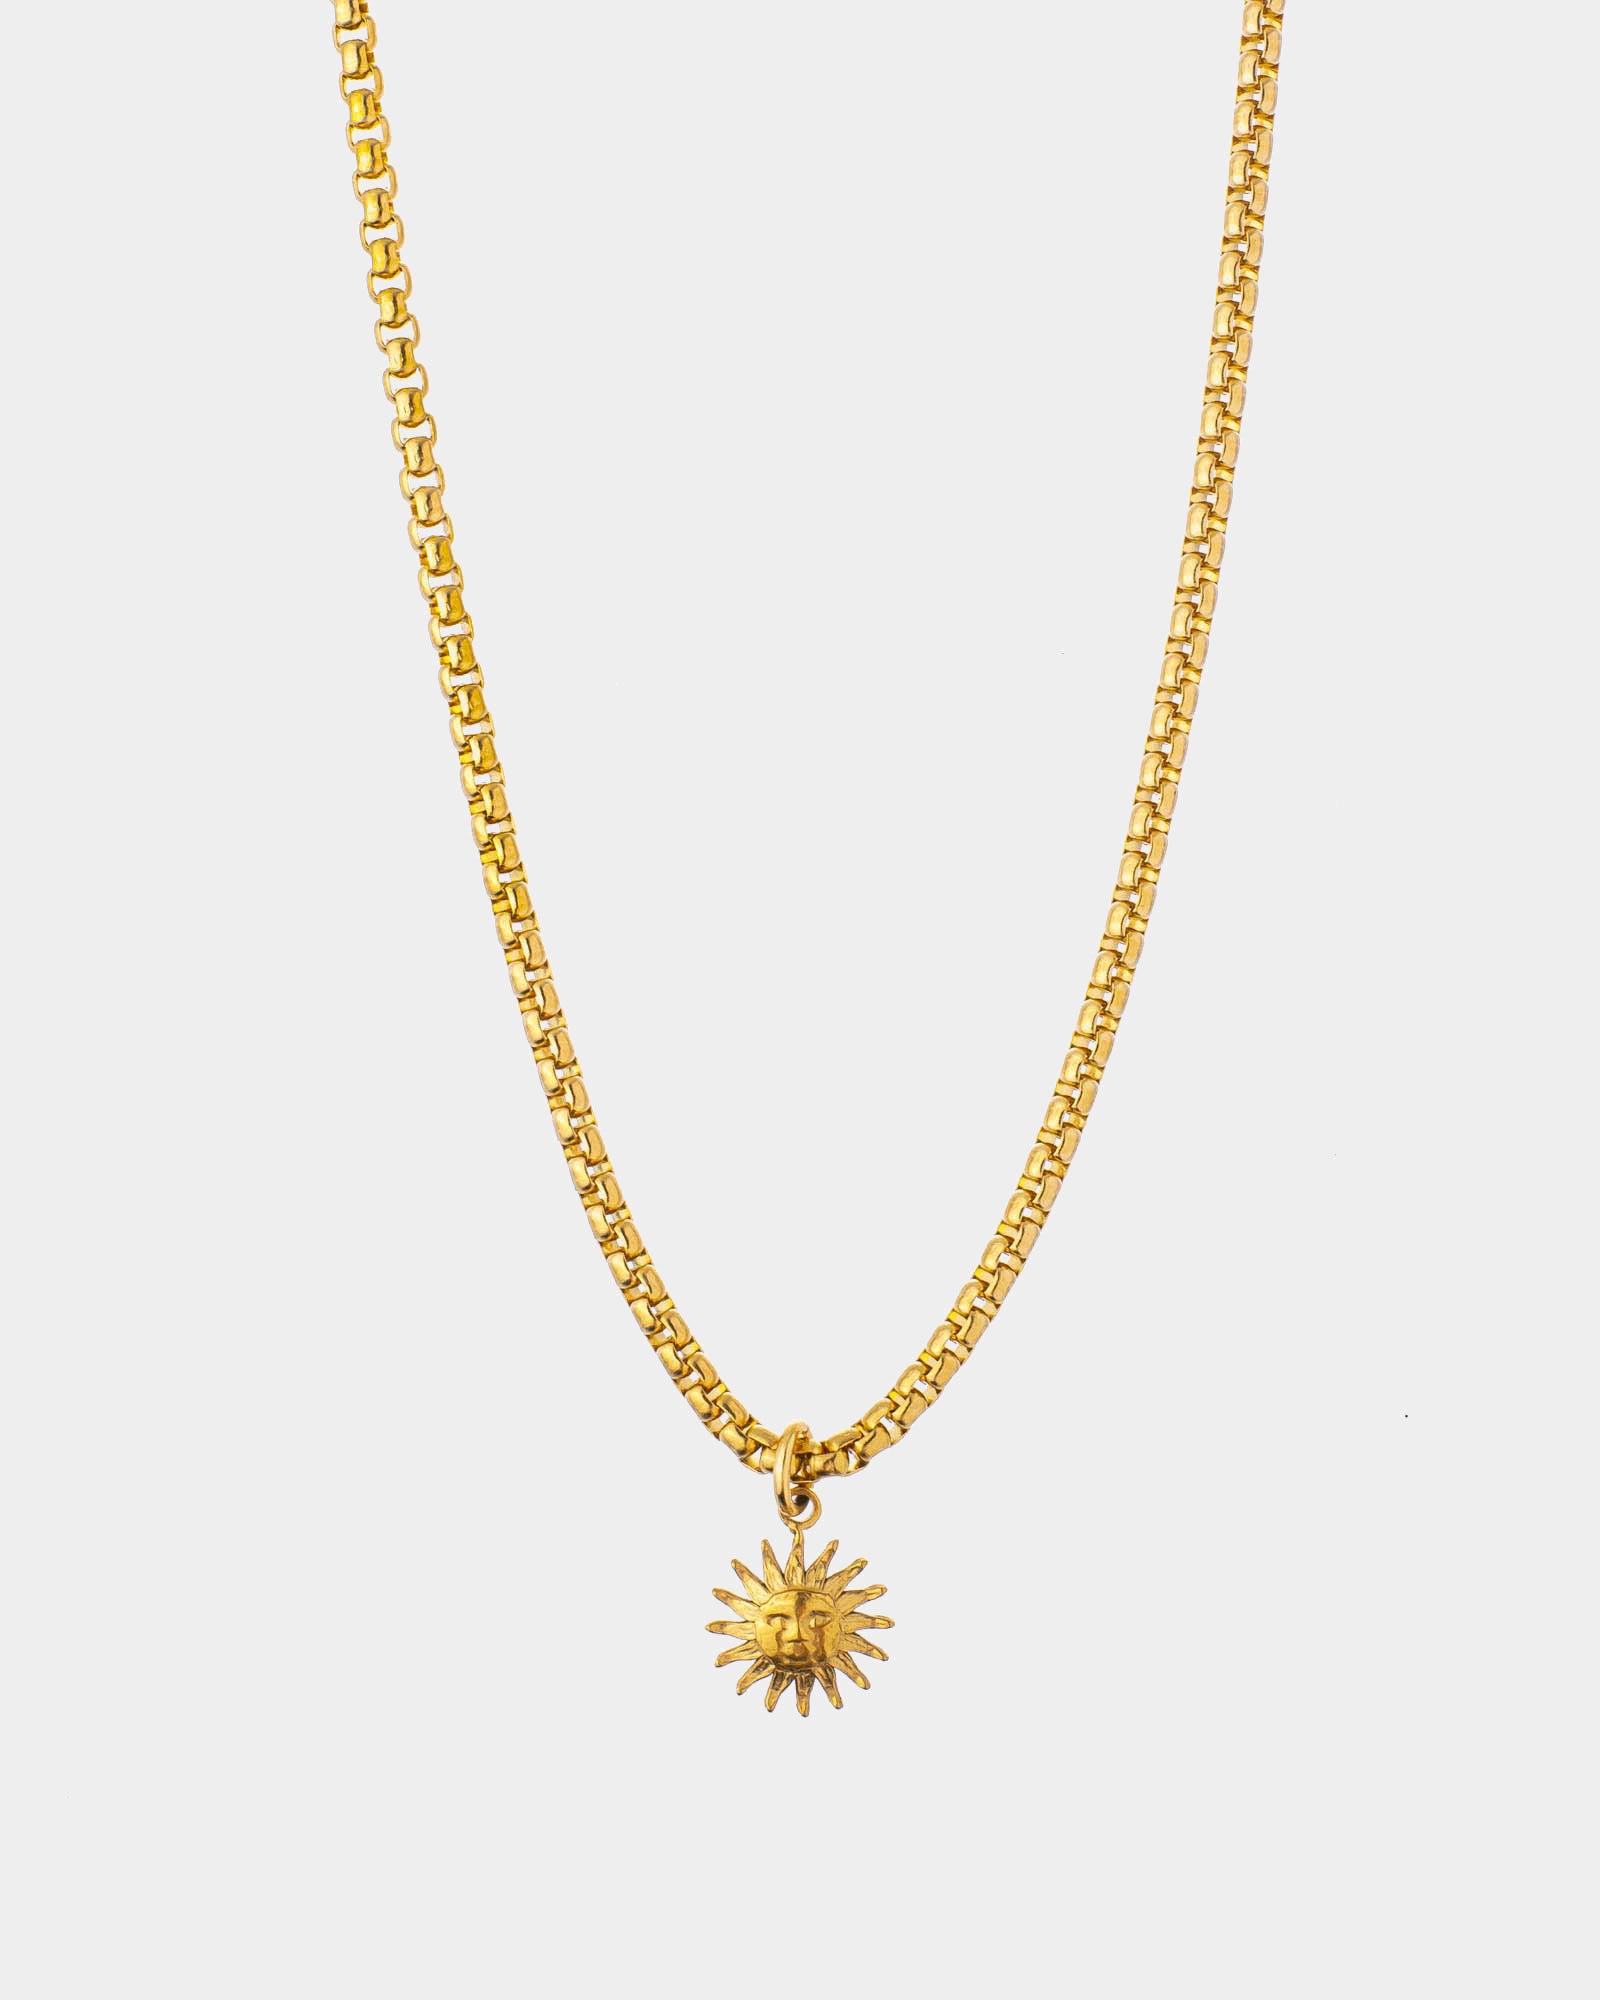 Sun Necklace - Kauai Chain Golden Steel Necklace with 'Sun' pendant - Online Unissex Jewelry - Dicci